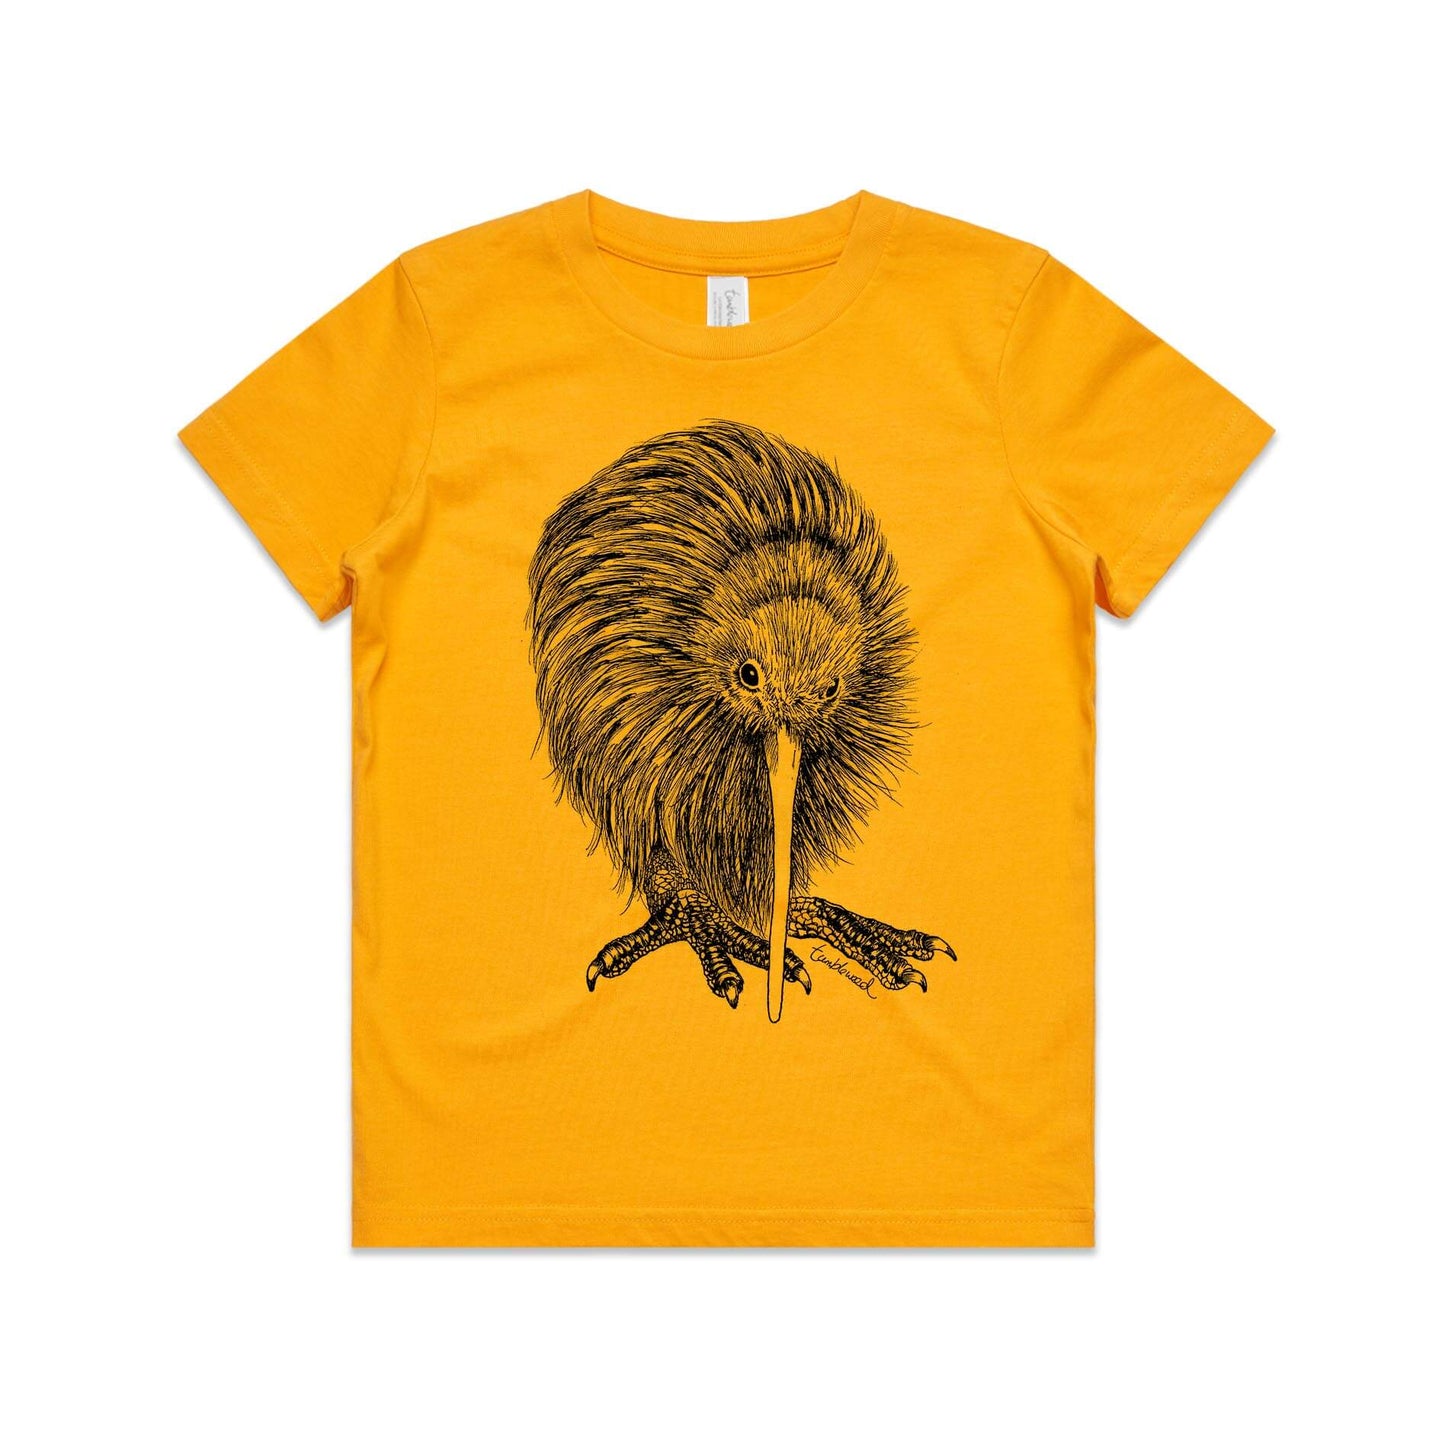 Gold, cotton kids' t-shirt with screen printed Kids kiwi design.